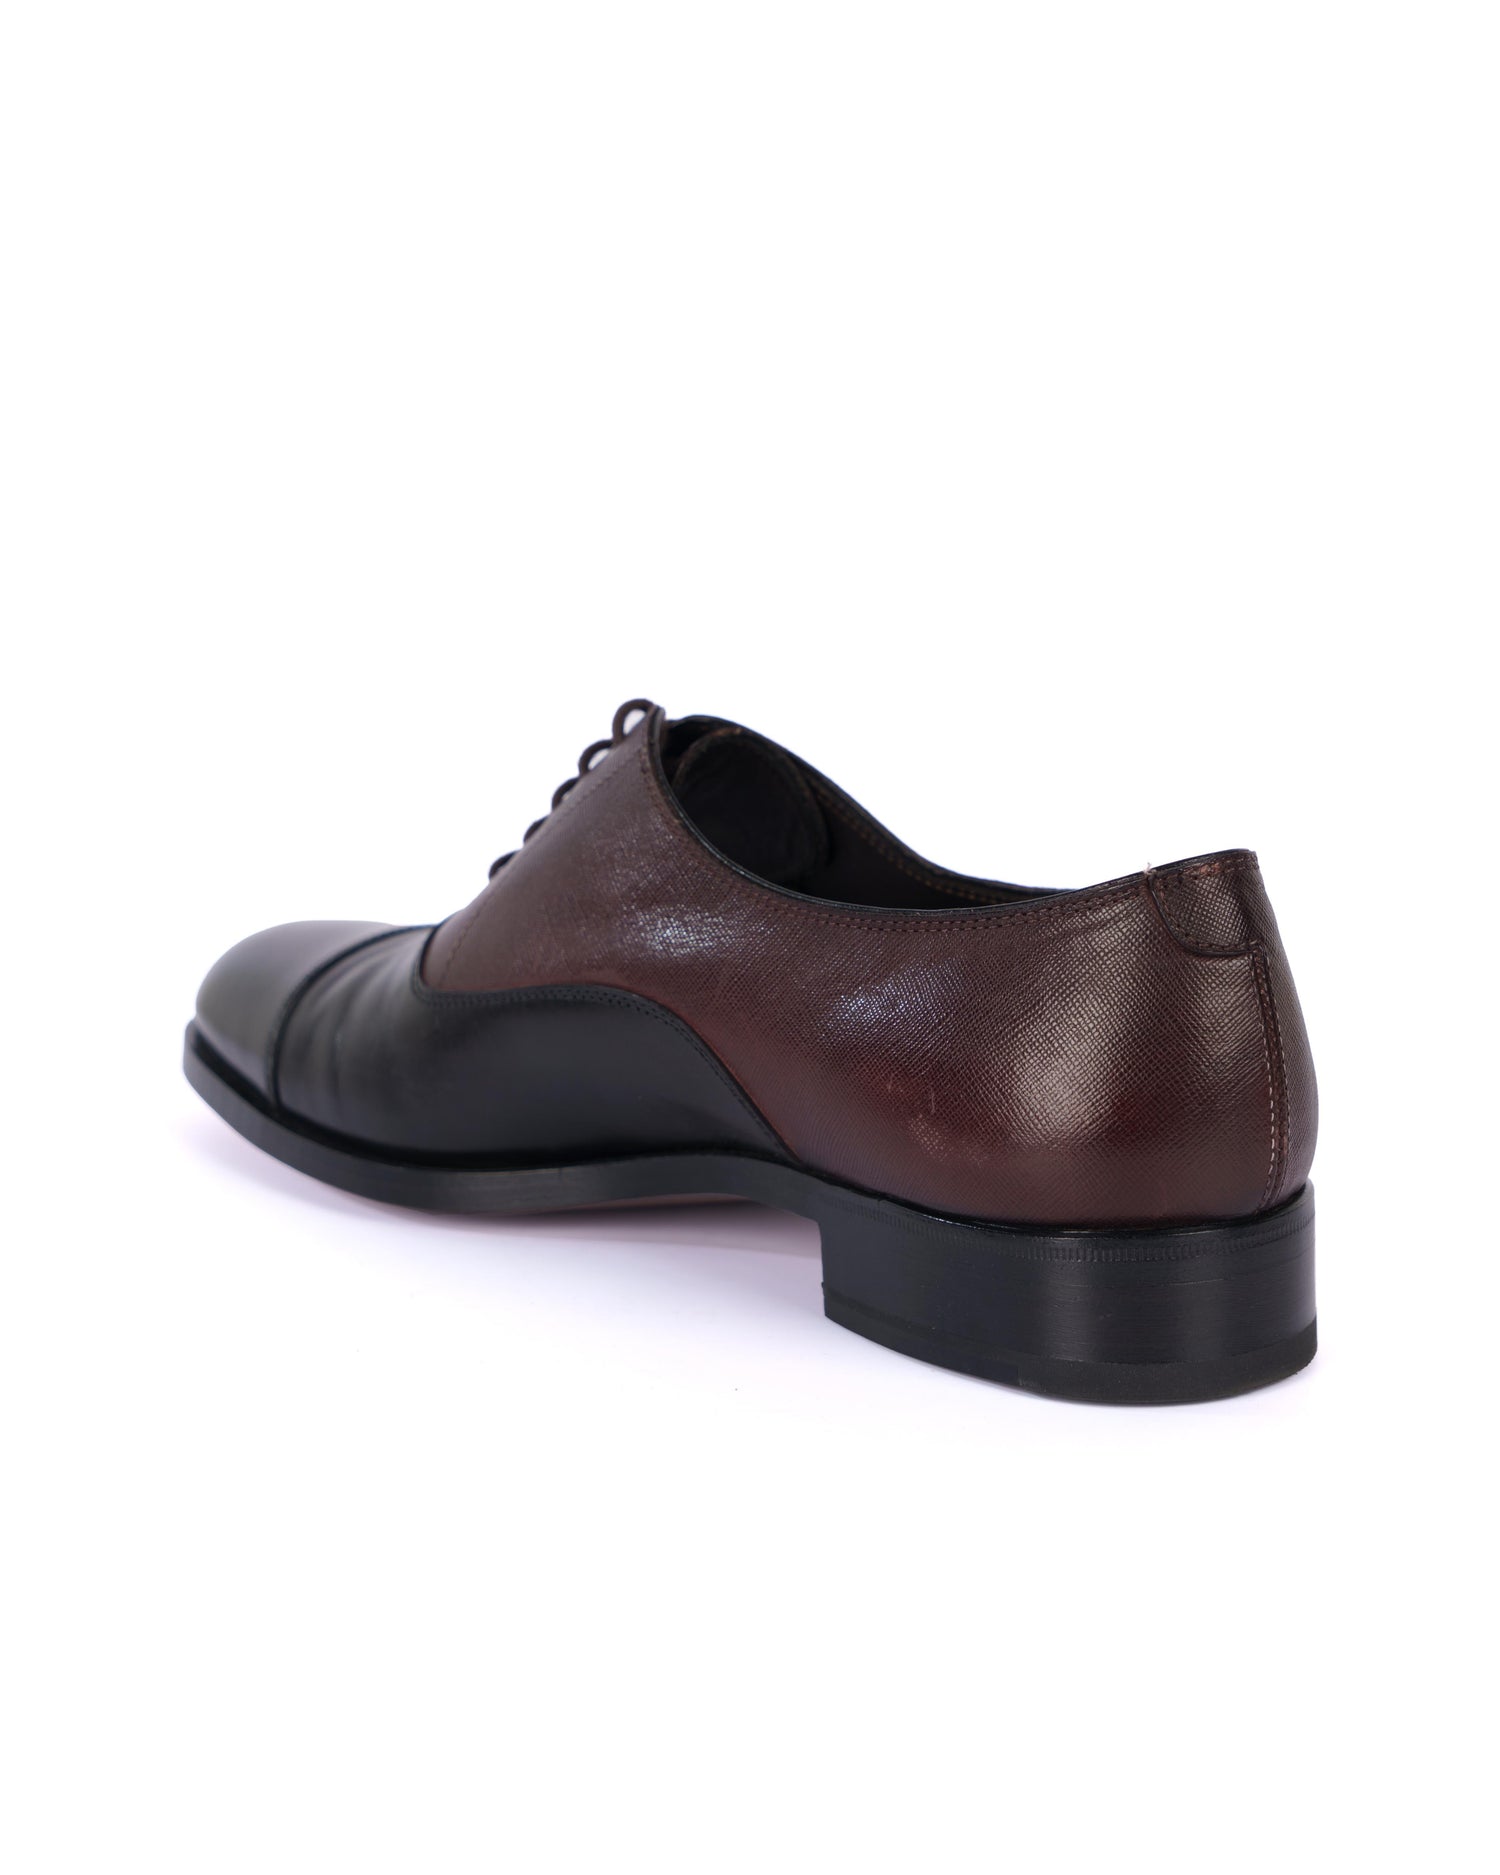 Black/Brown Oxford Shoes